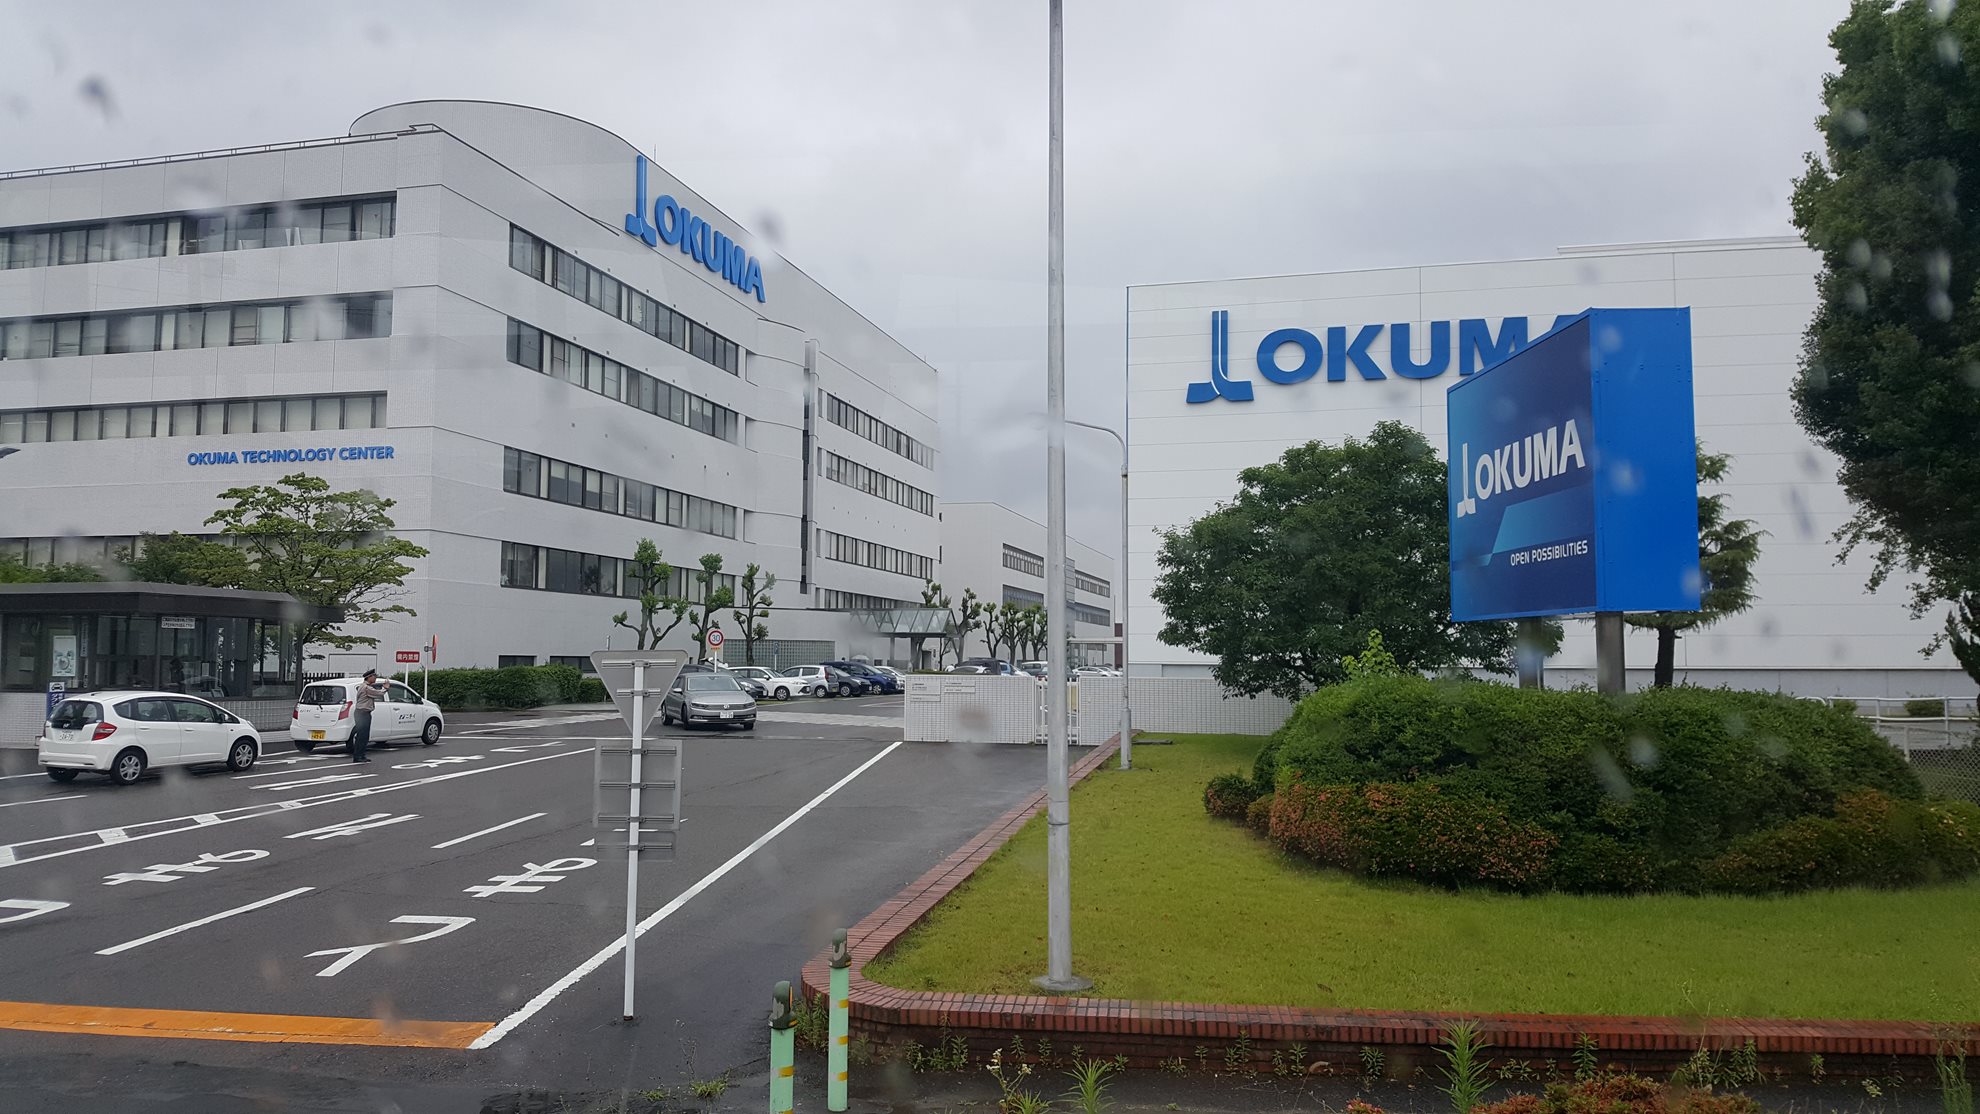 Visit to the OKUMA, Japan manufacturing premises